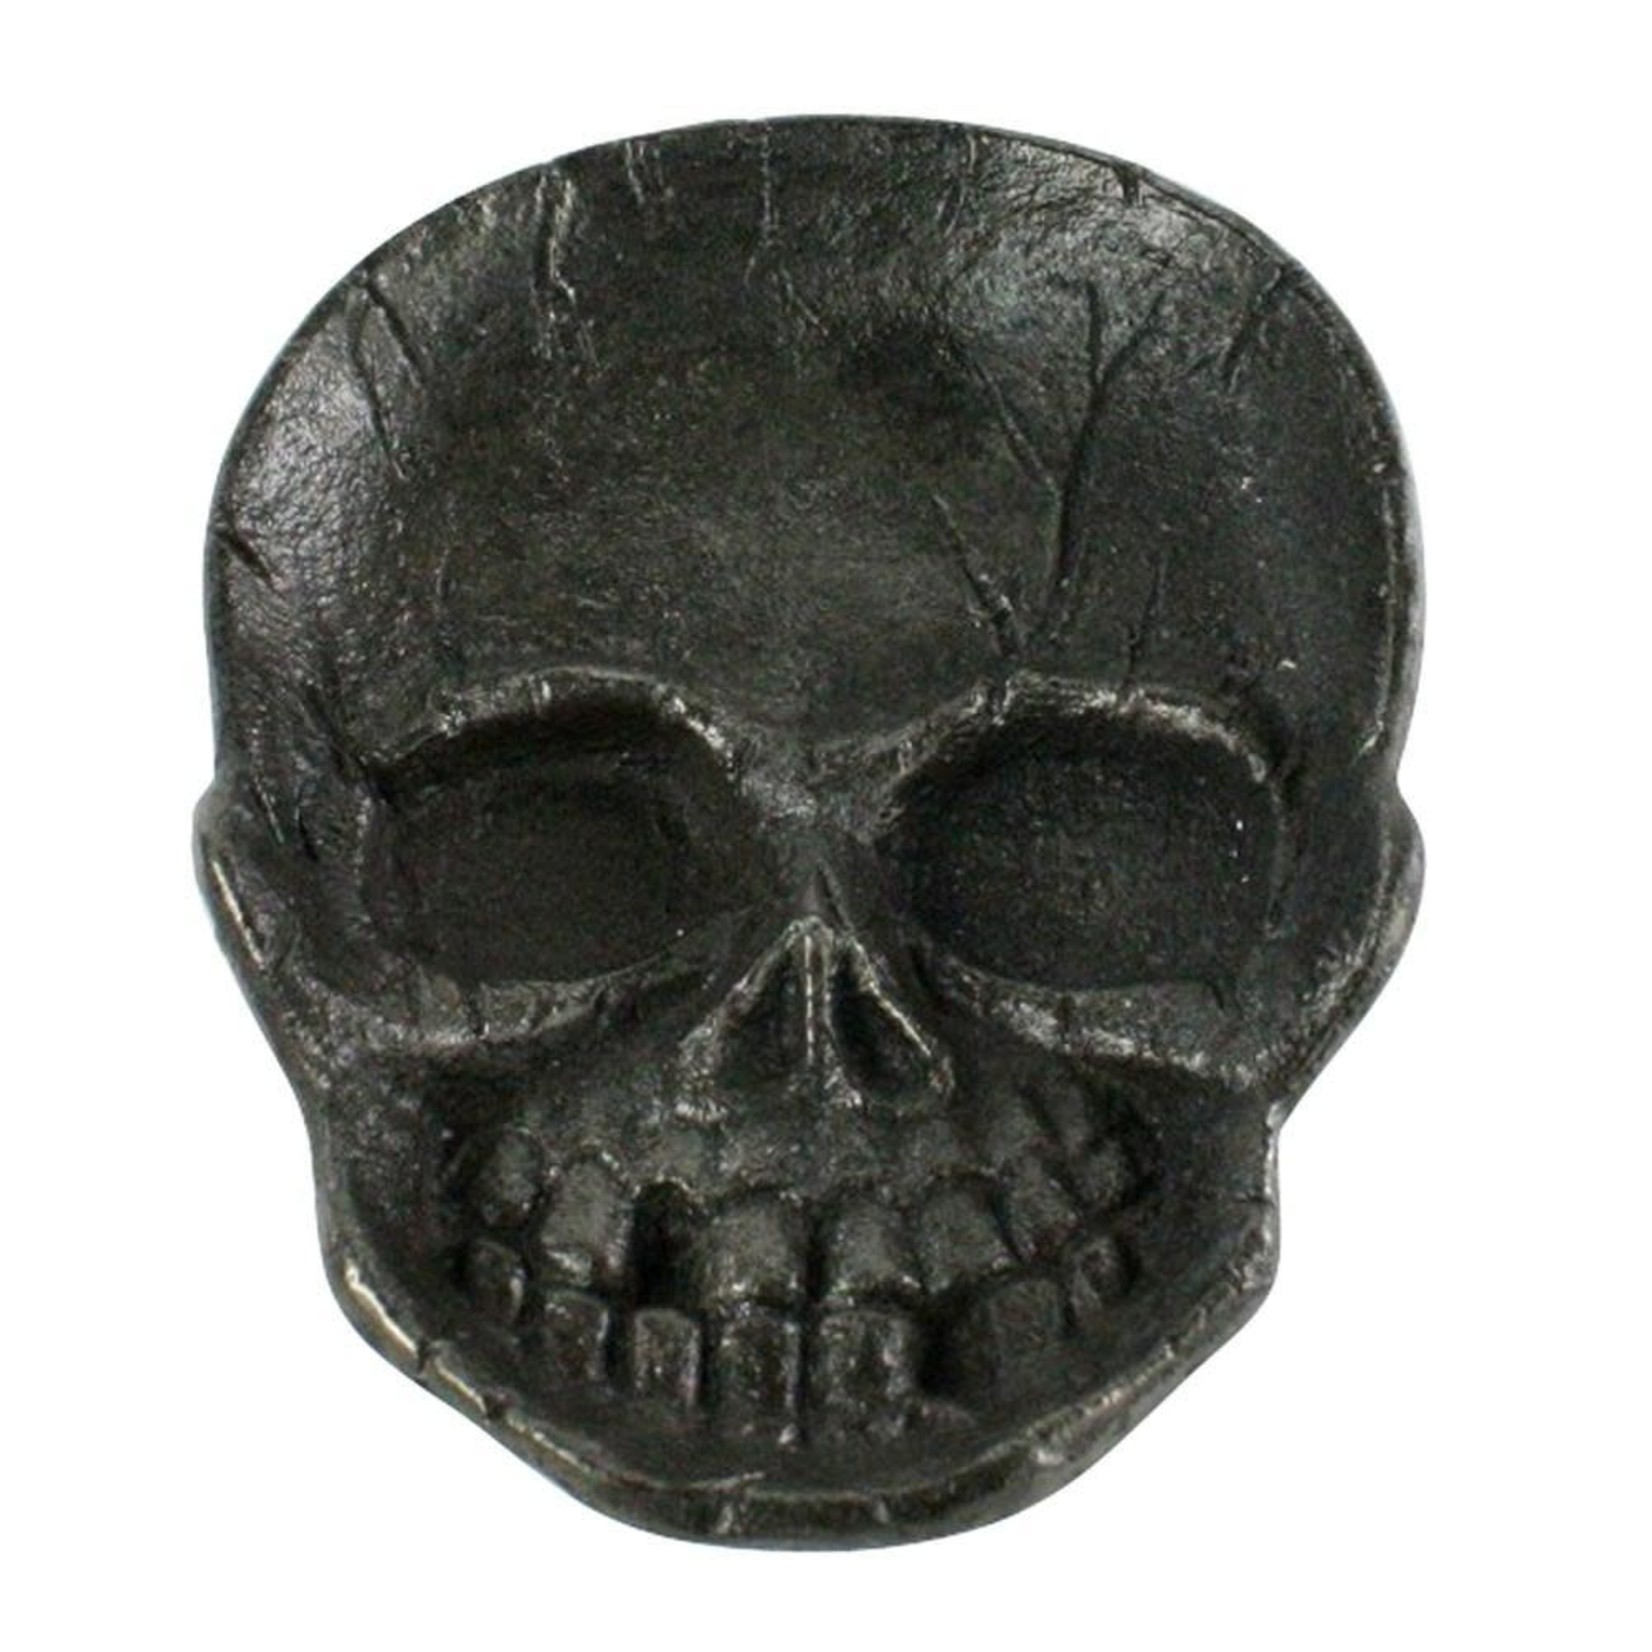 Skull Cast Iron Dish